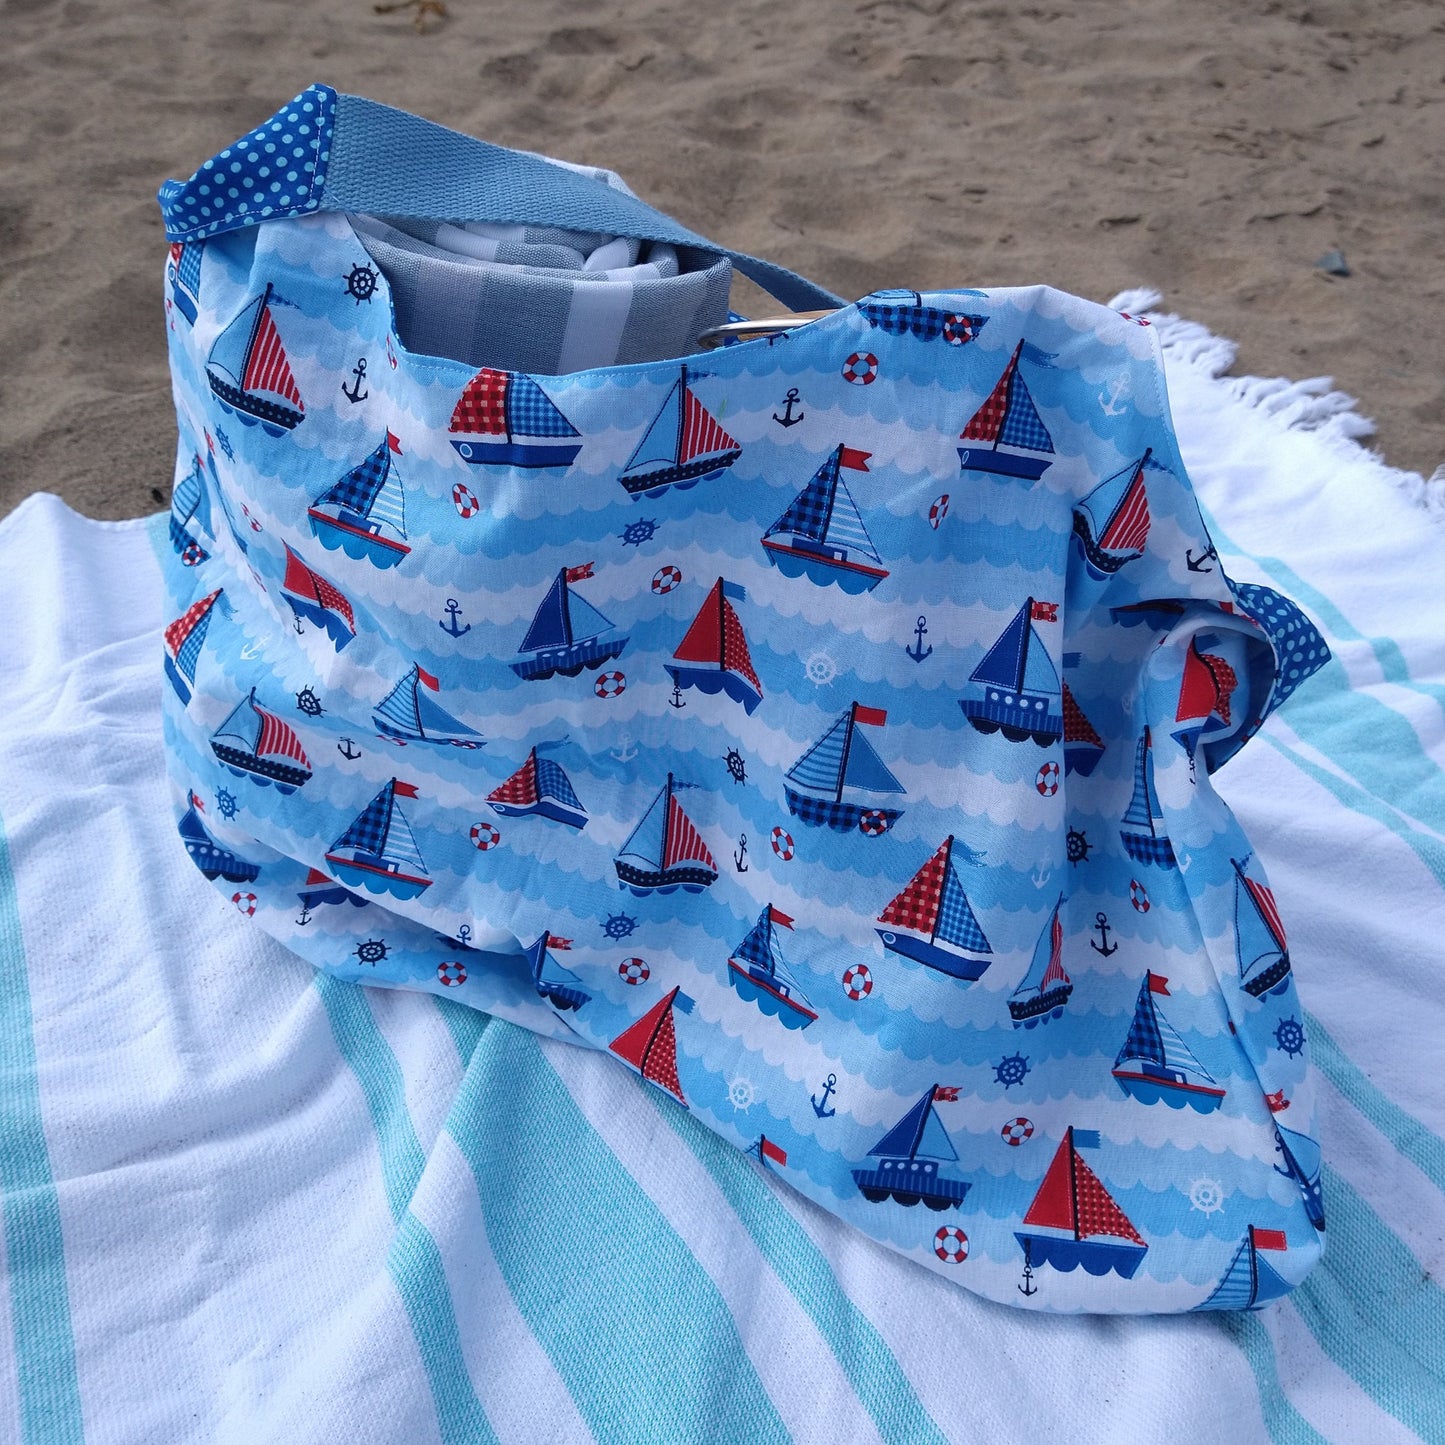 Shopping/Beach bag, reversible, size large, blue sailing ships (Handmade in Canada)